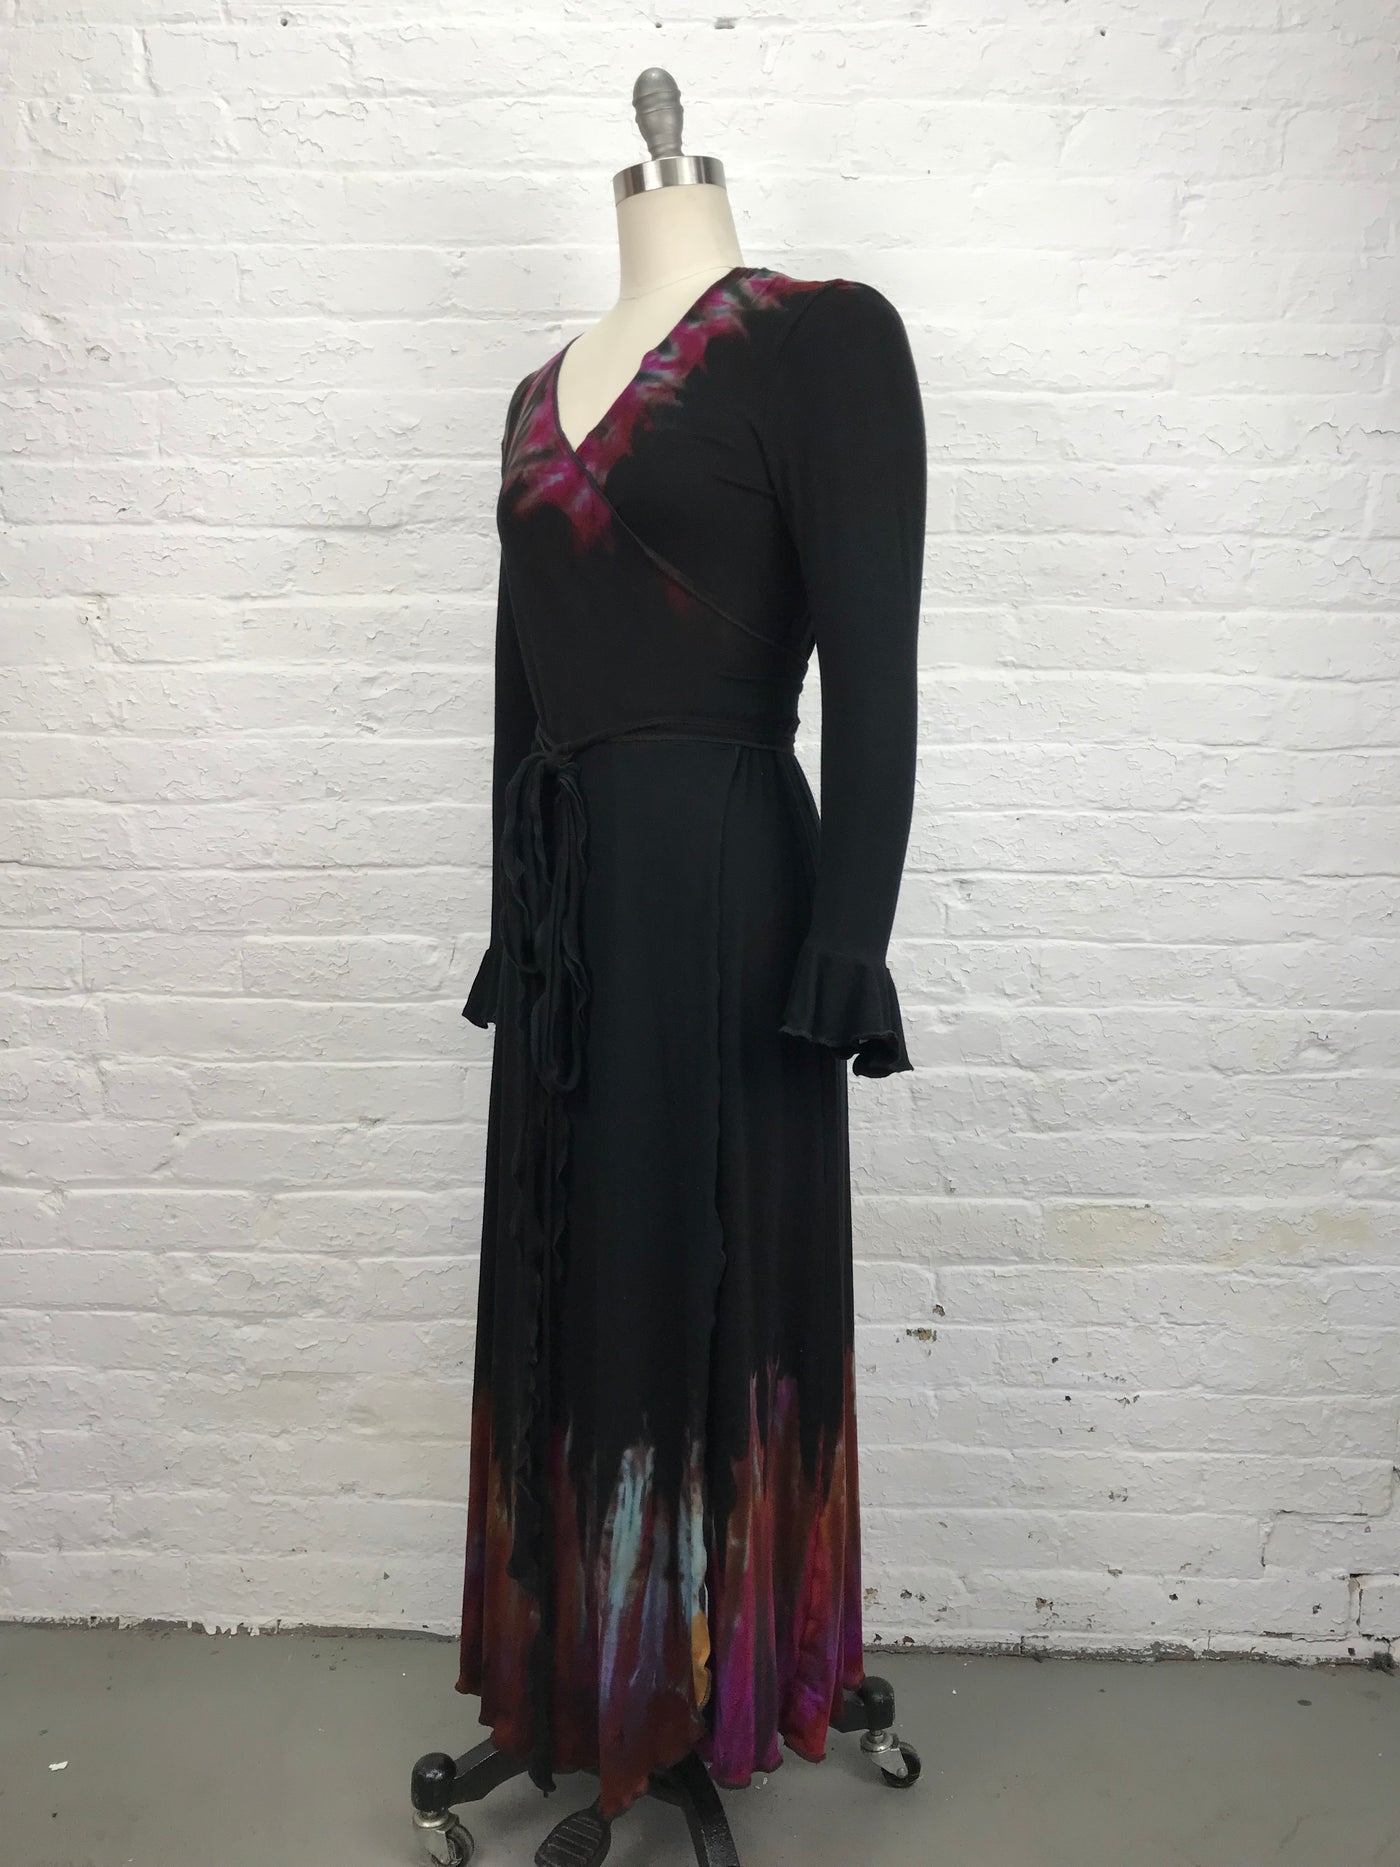 Flamenco Wrap Maxi Dress in Fiery Chili - side view